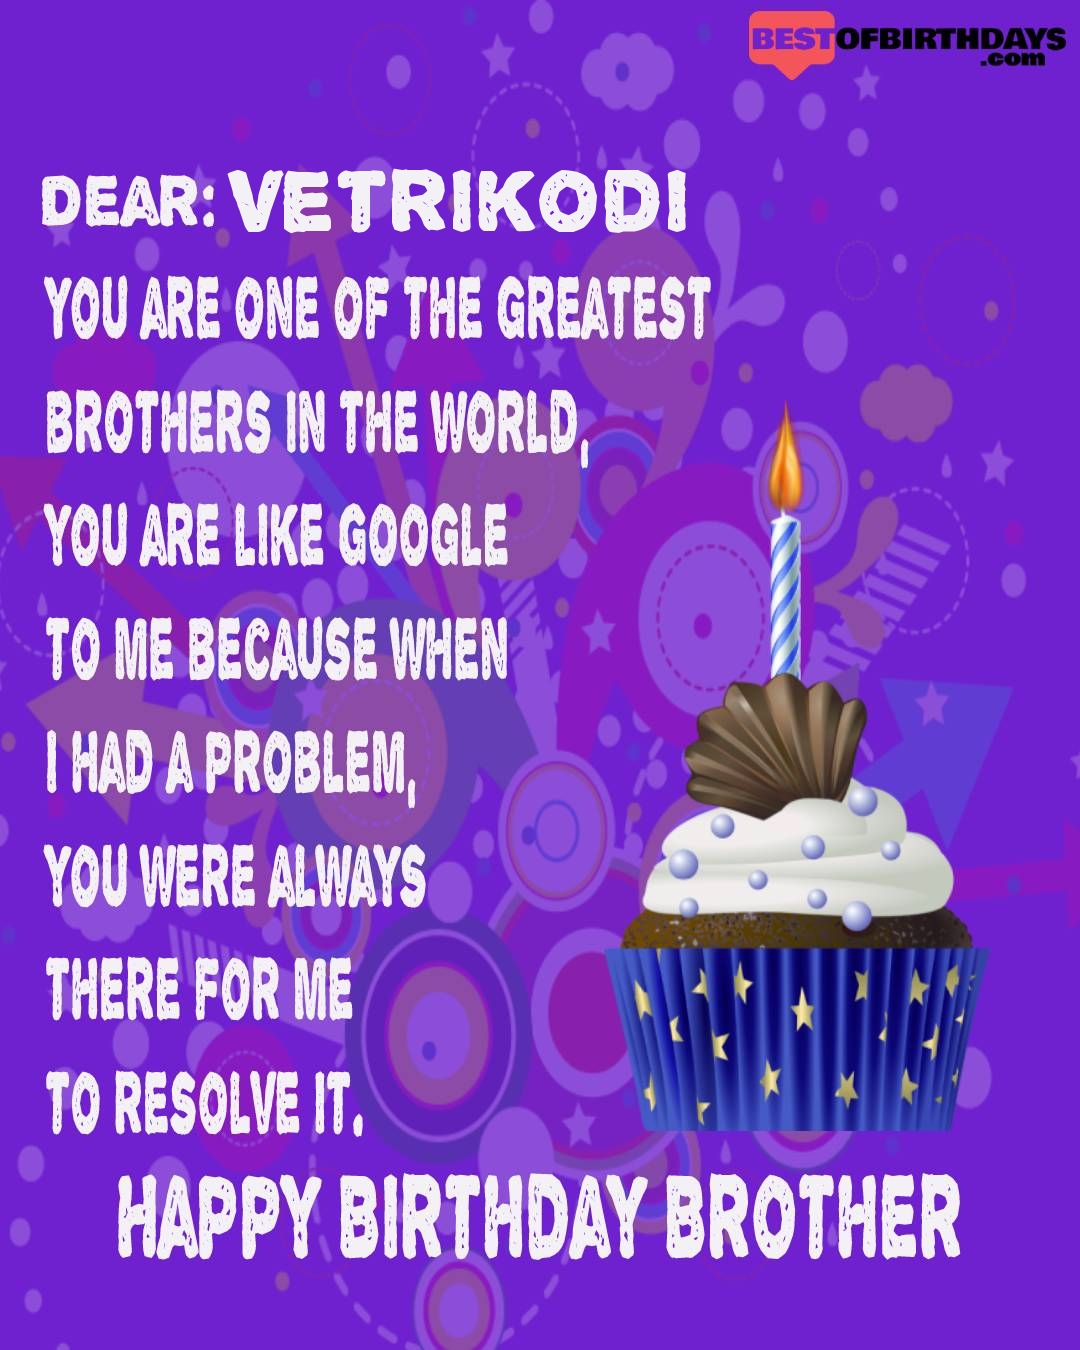 Happy birthday vetrikodi bhai brother bro